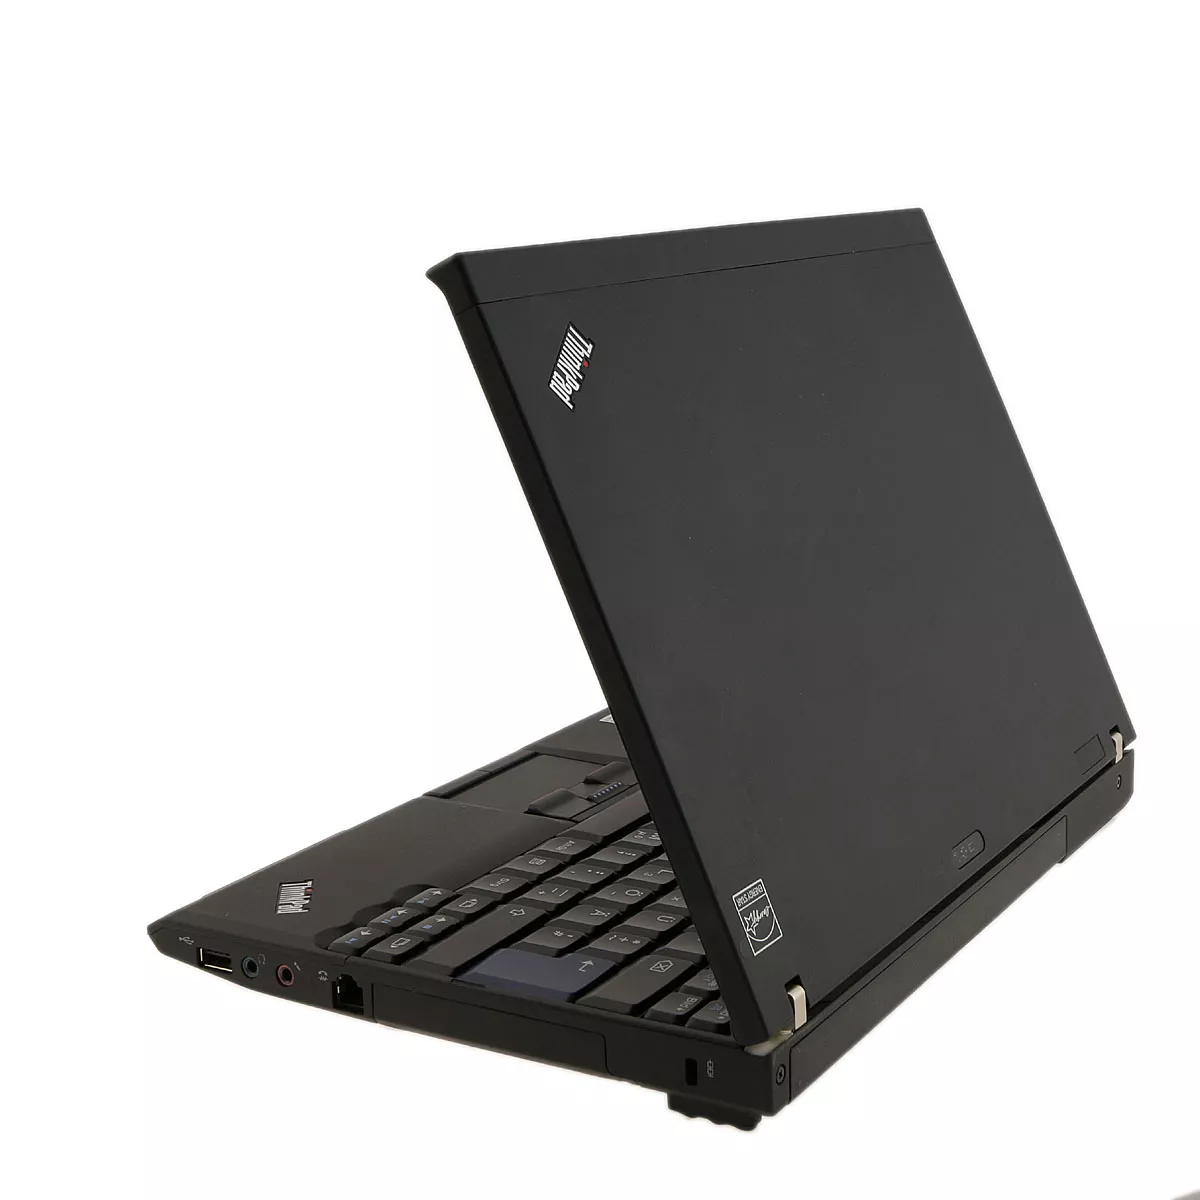 Lenovo ThinkPad X201 Core i5 560M 2,6 GHz Webcam